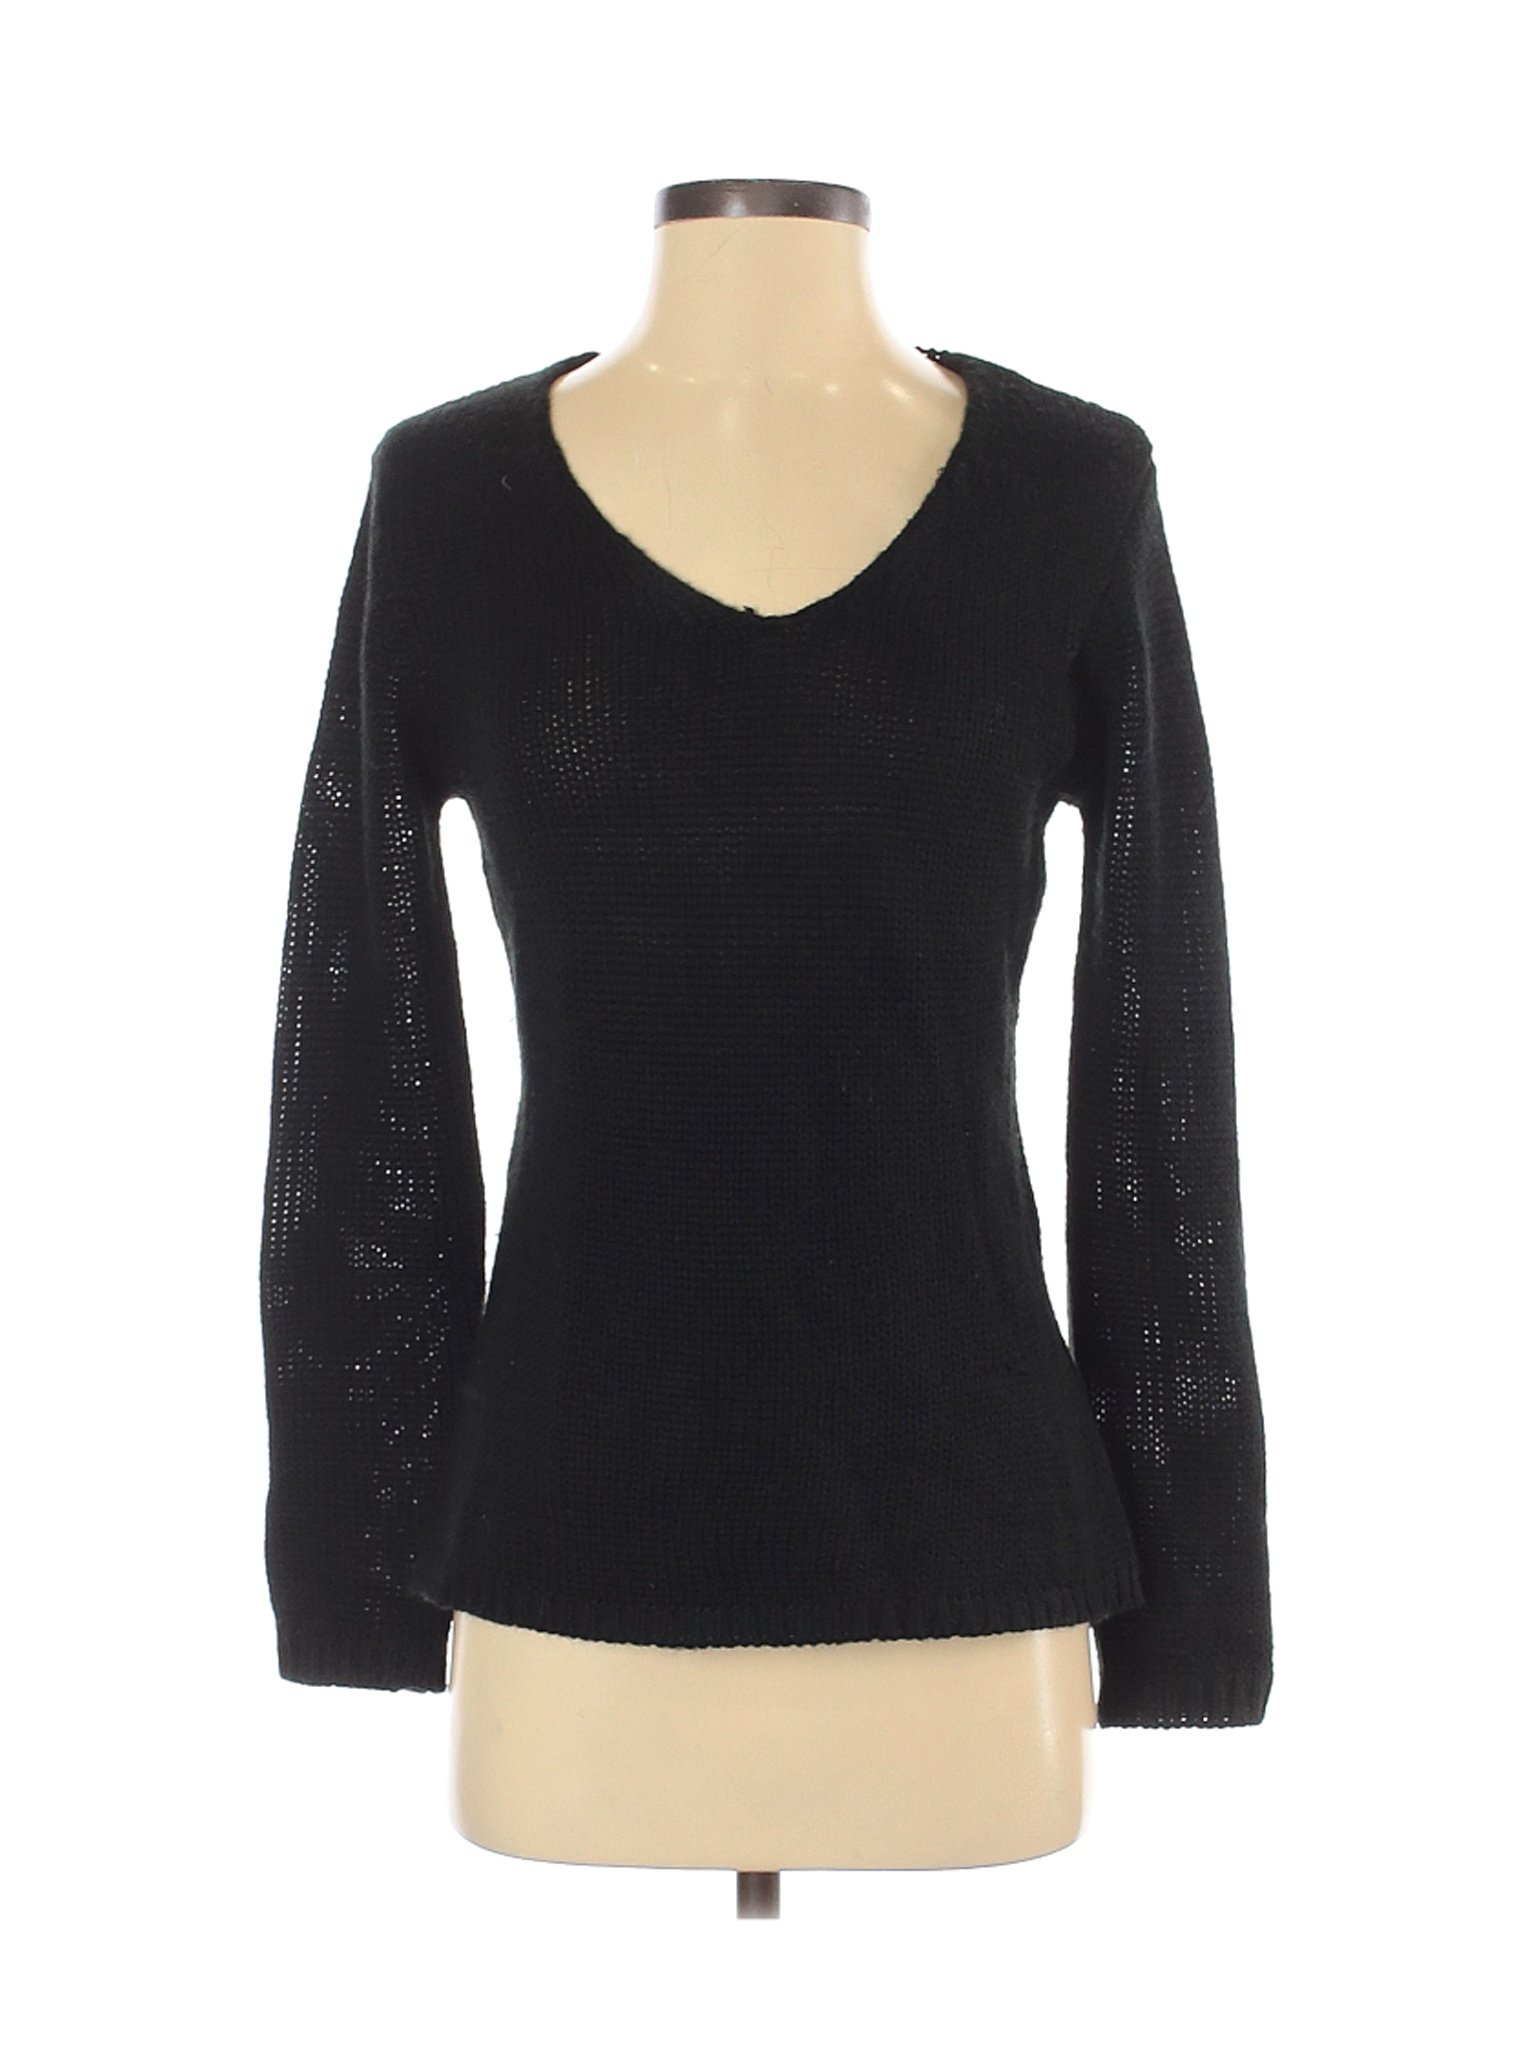 Metric Knits Women Black Pullover Sweater S | eBay